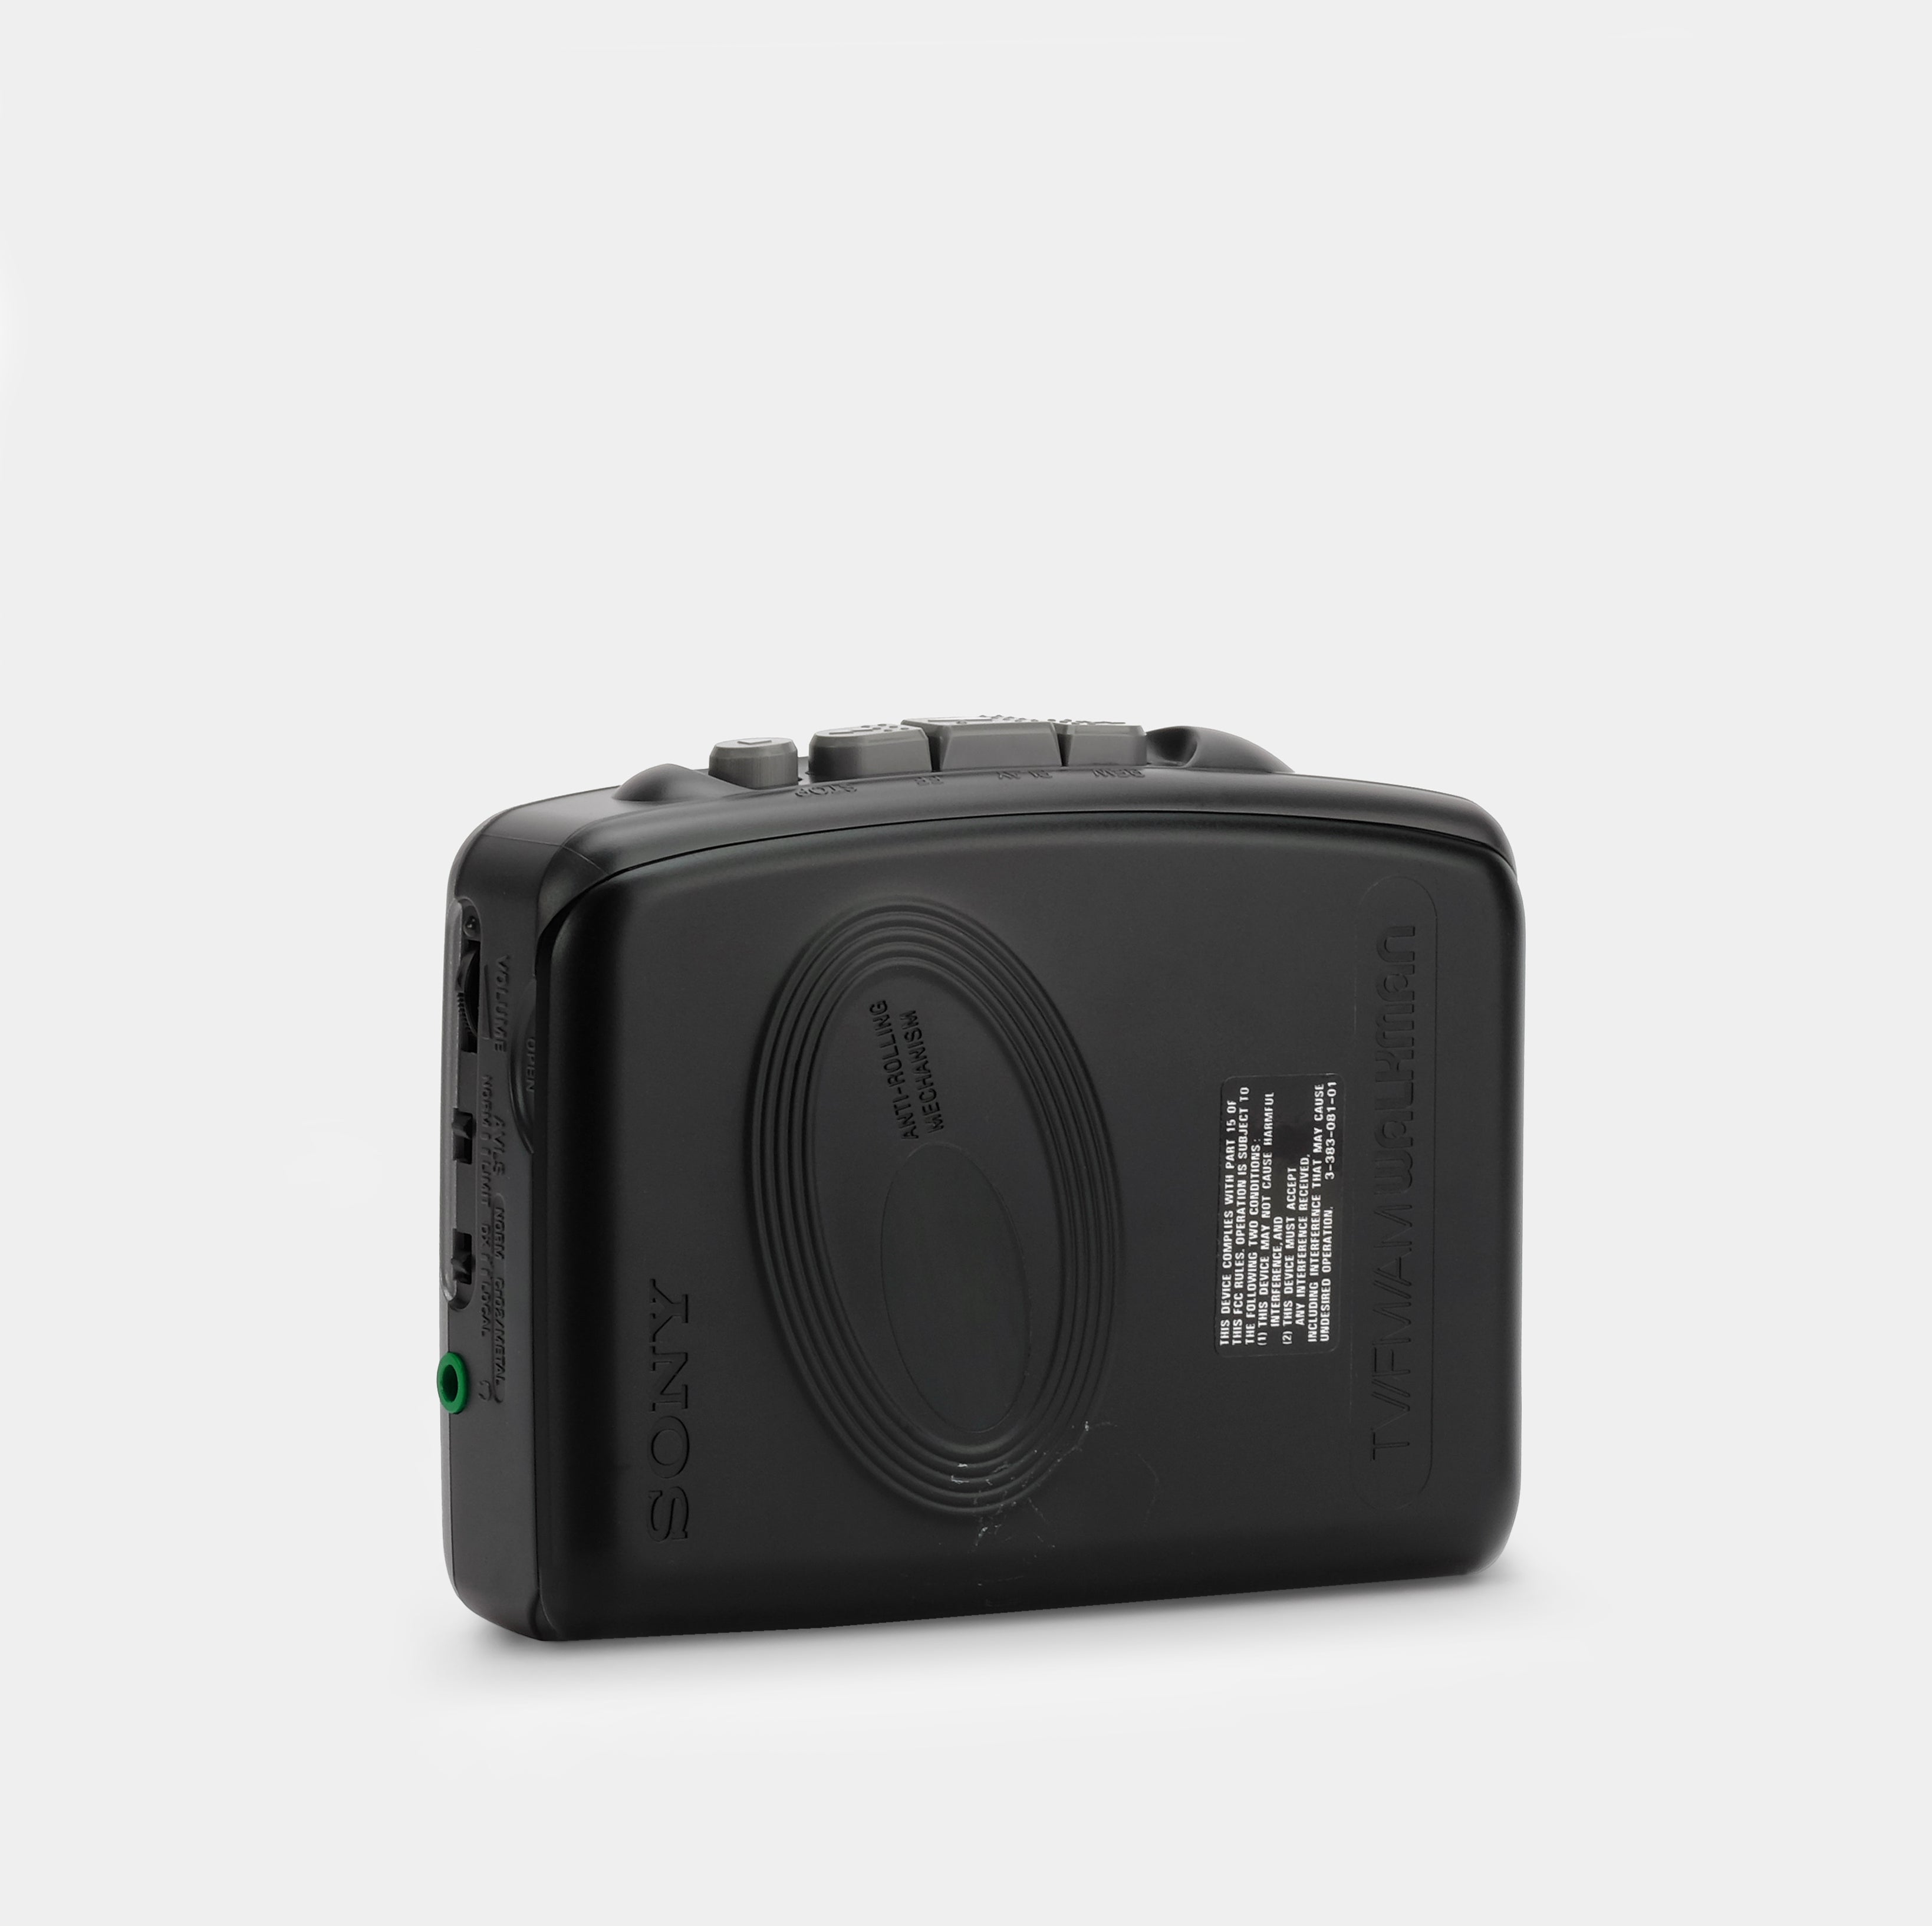 Sony Walkman WM-FX277 TV/AM/FM Portable Cassette Player